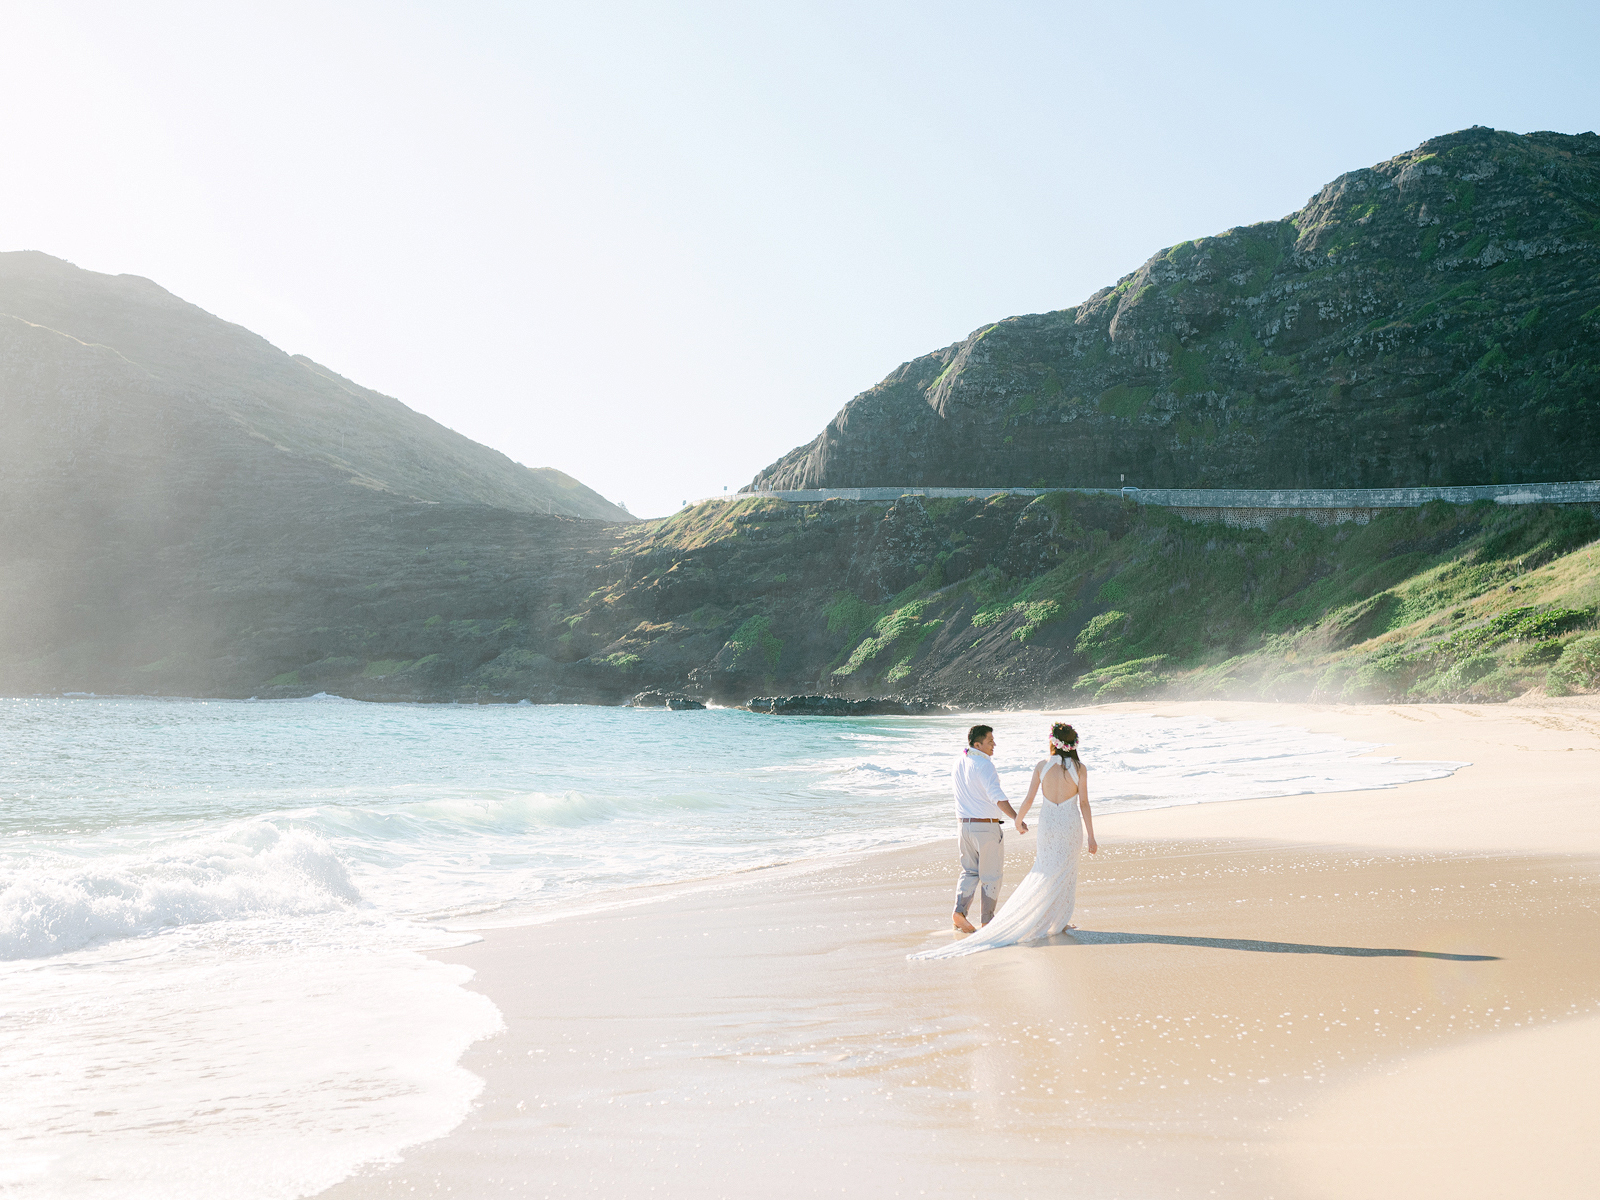 Oahu sunrise wedding at Makapu'u Beach by Laura Ivanova Photography